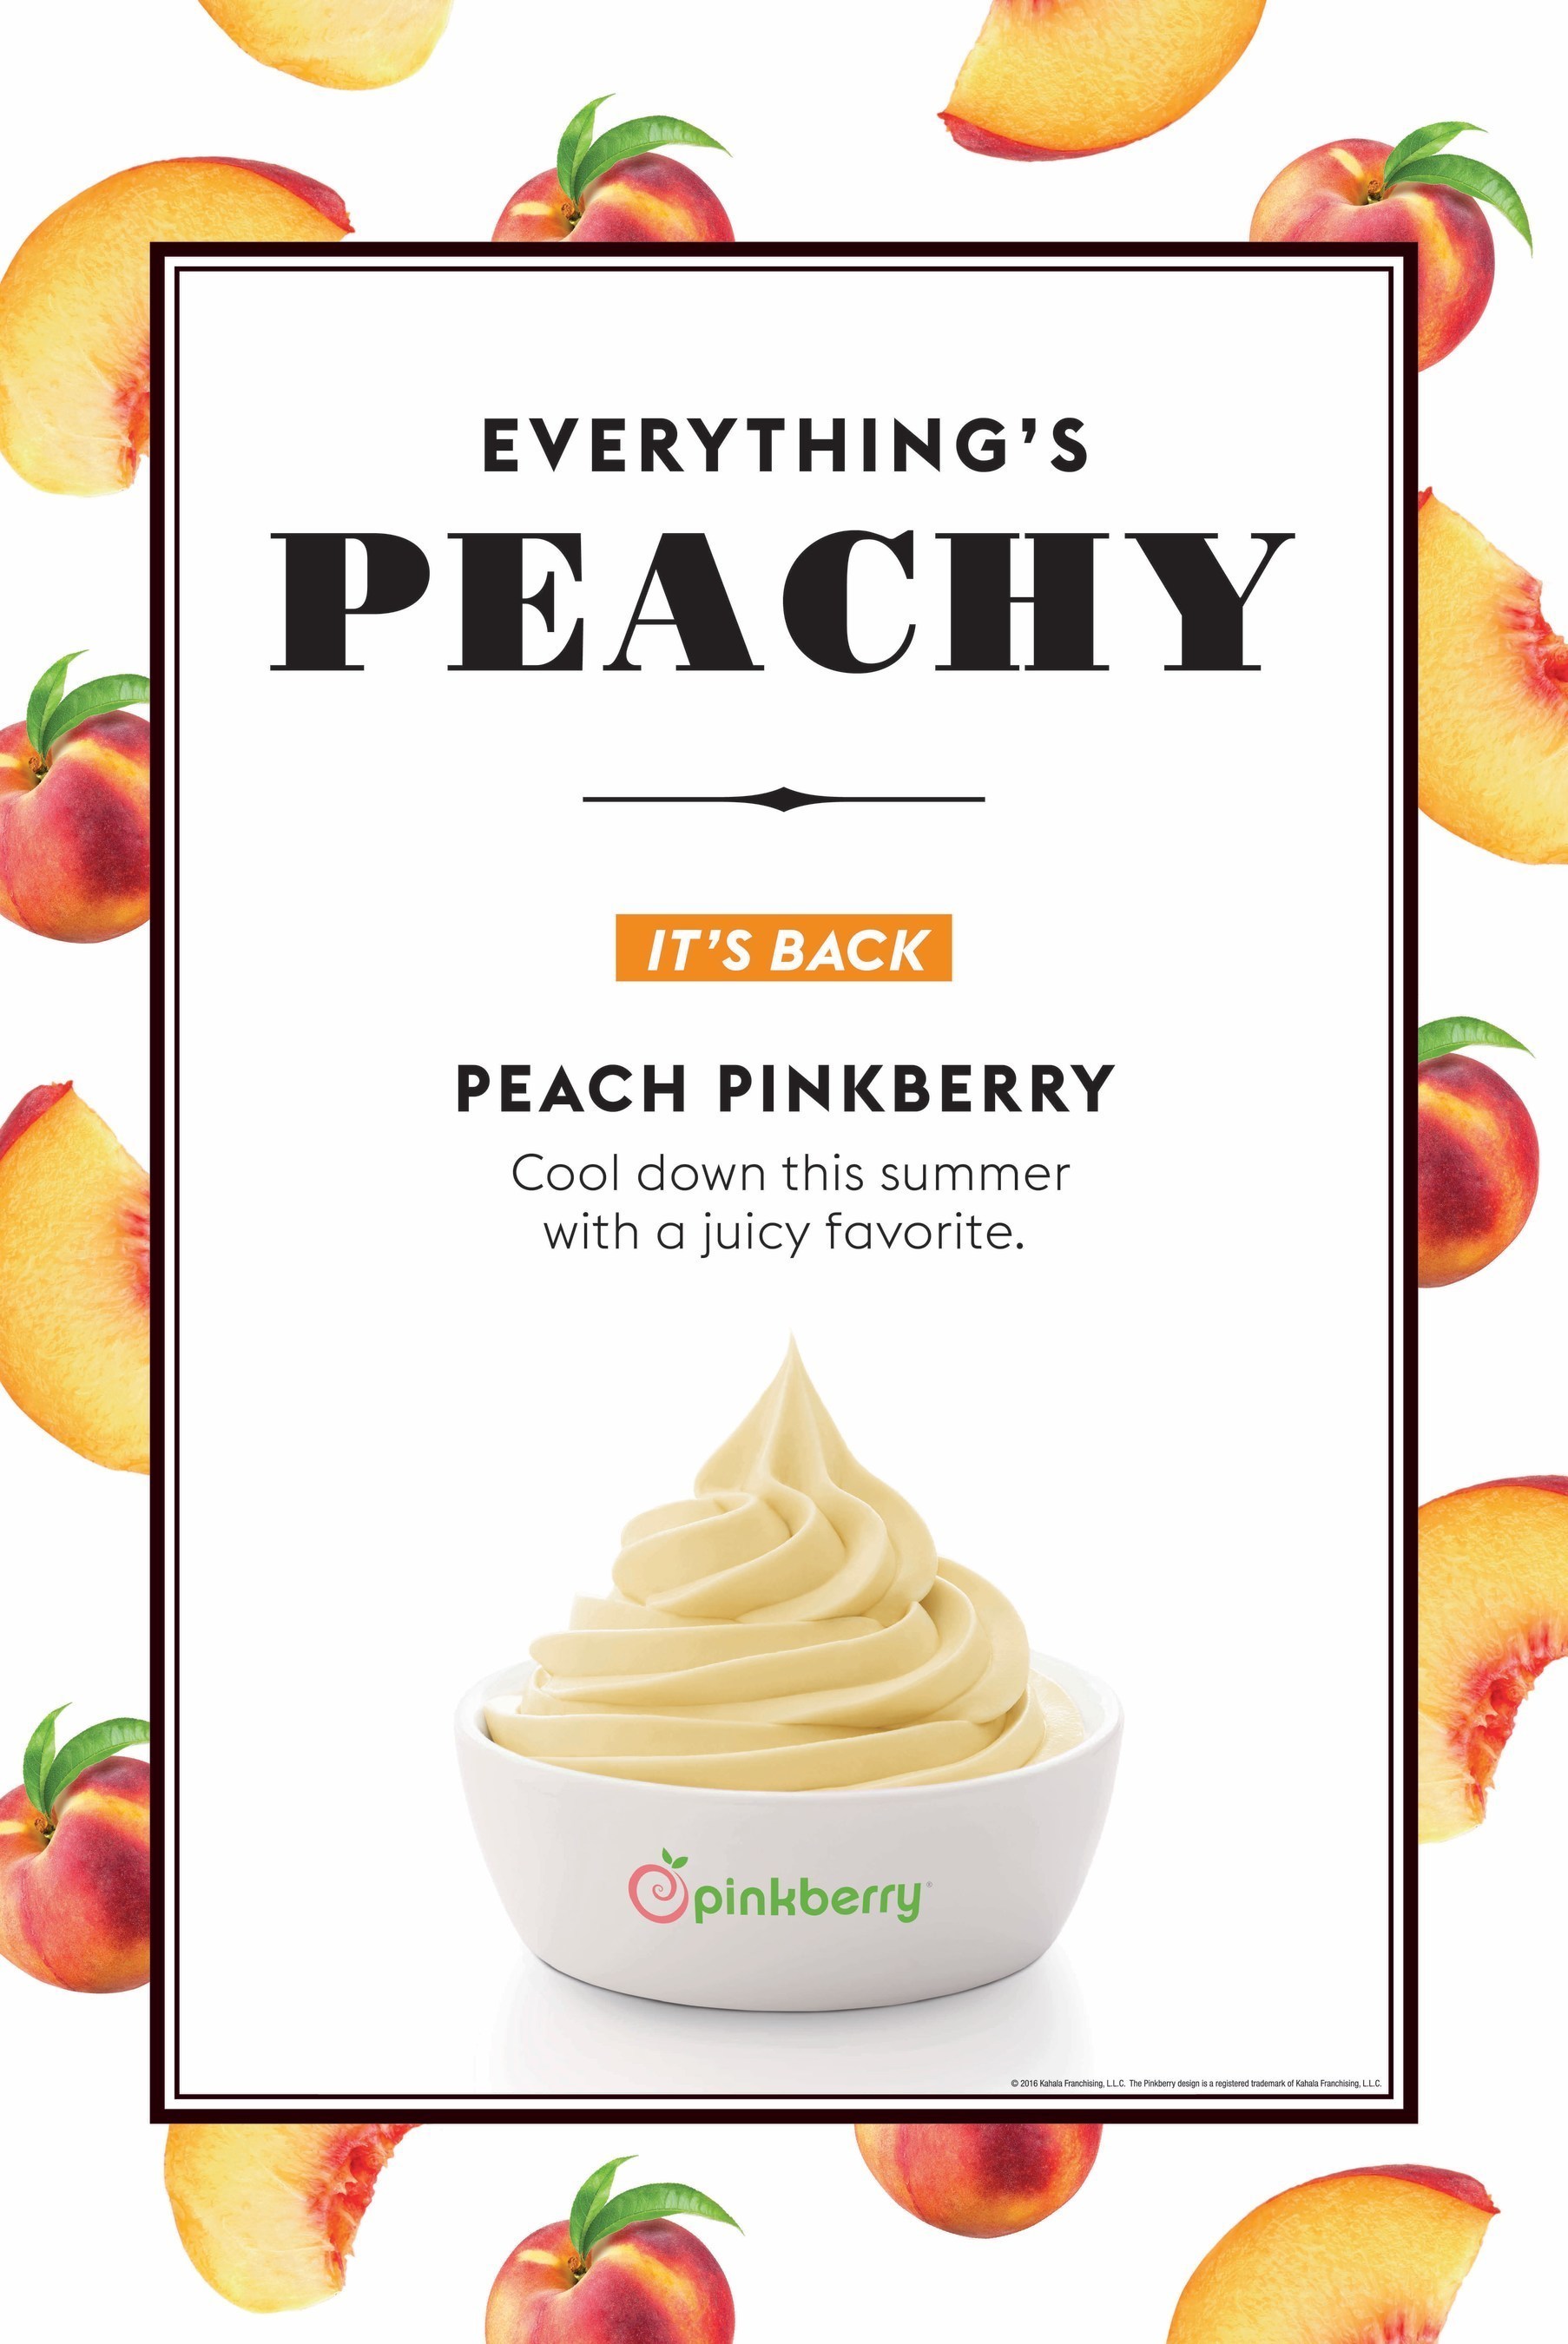 Pinkberry peach flavor